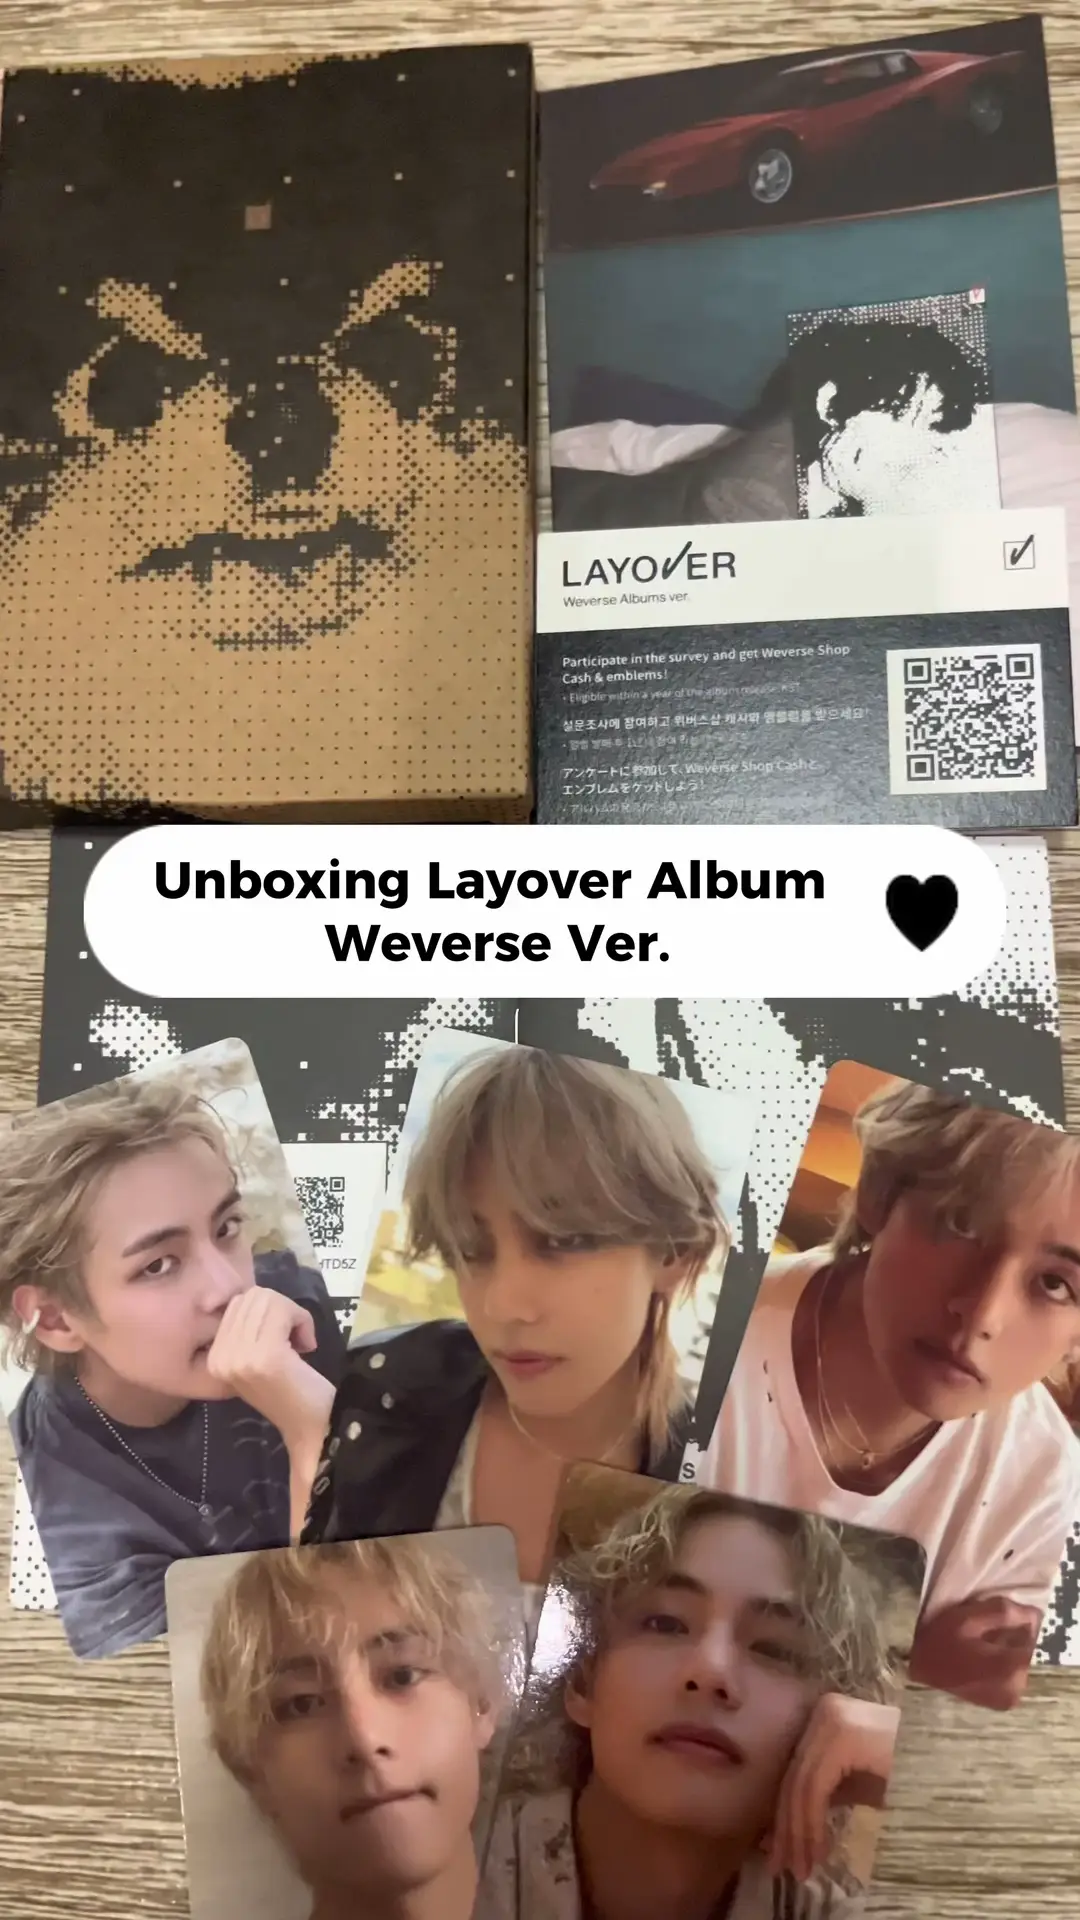 Unboxing V's Layover album